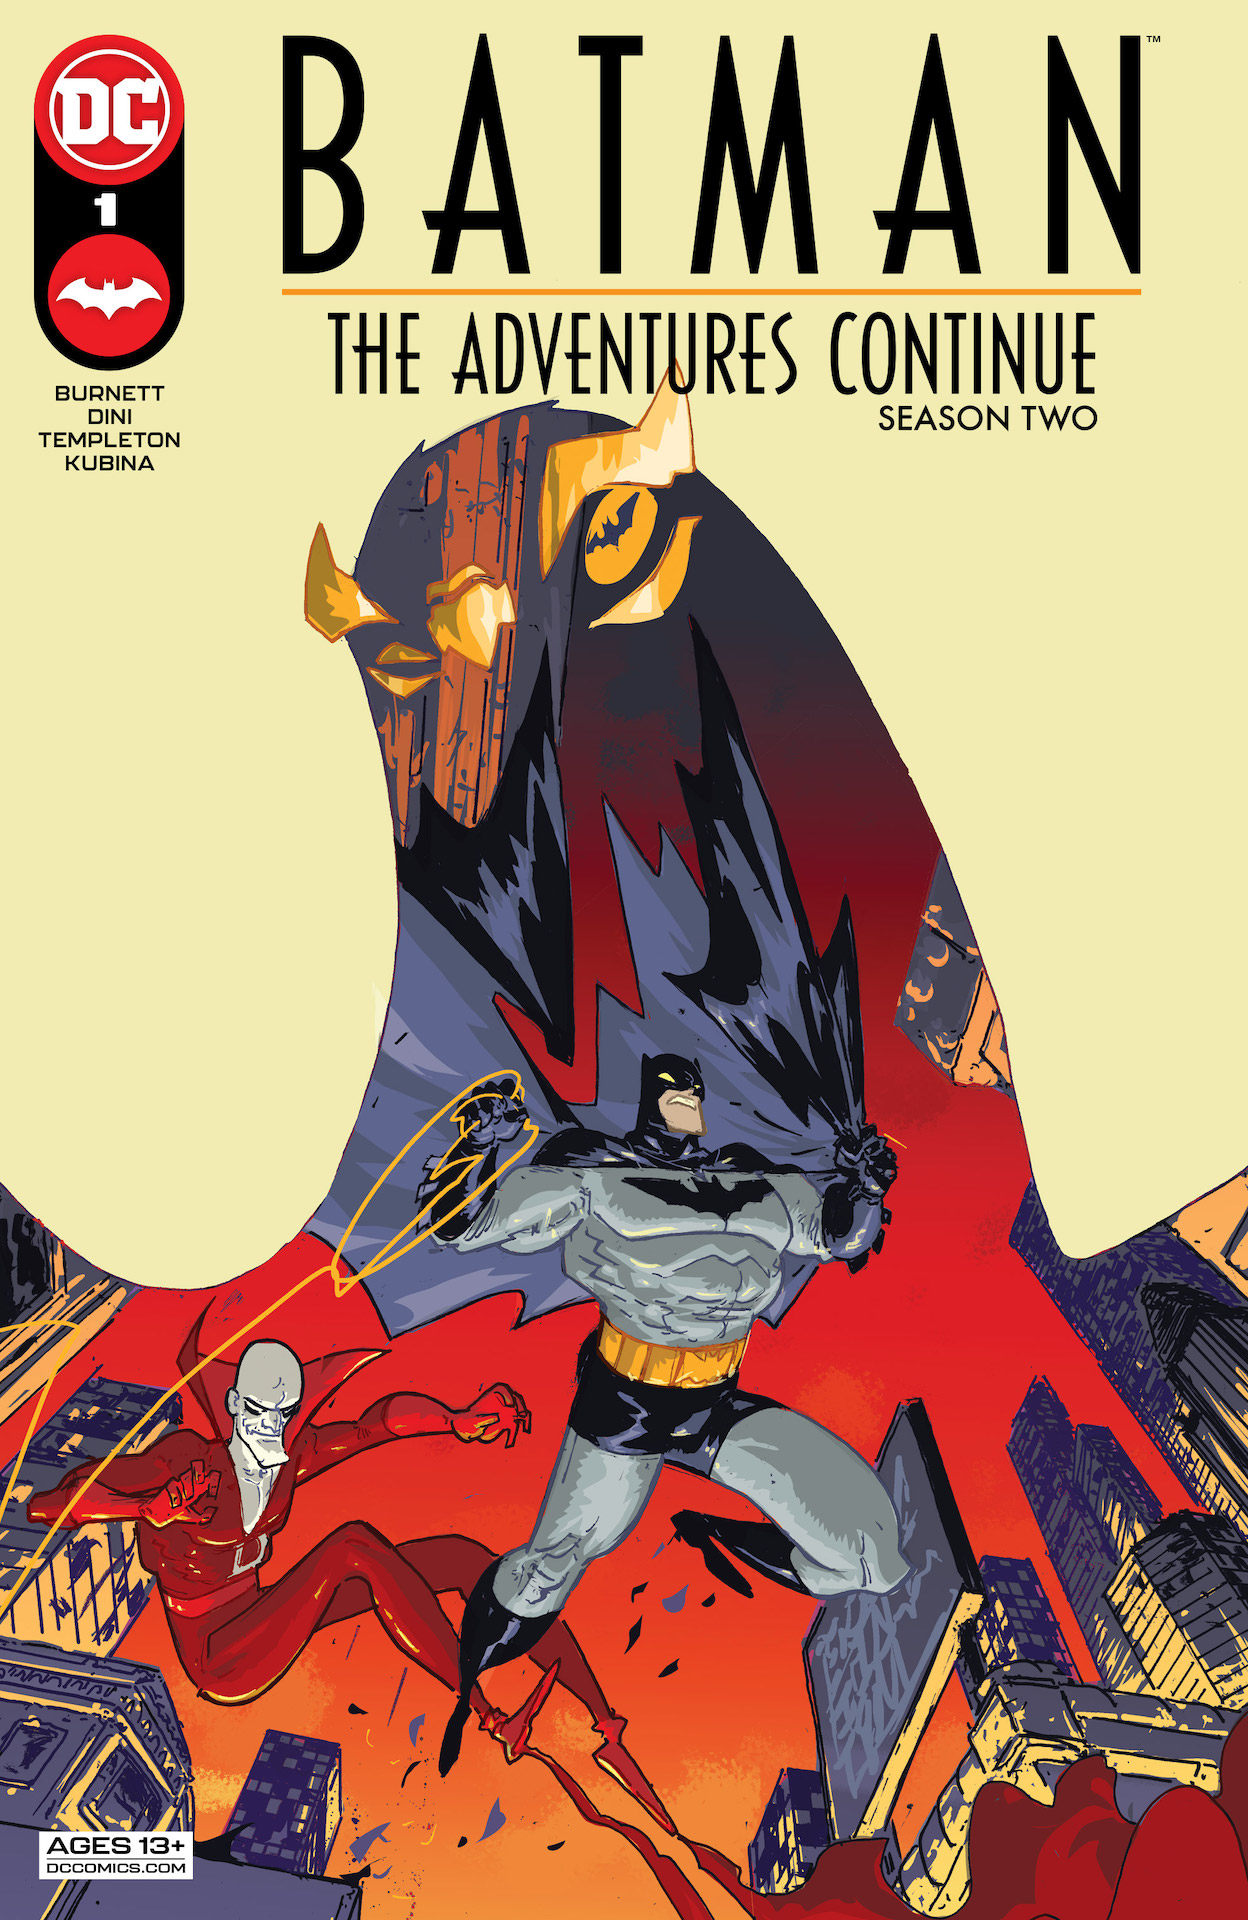 DC Preview: Batman The Adventures Continue Season Two #1